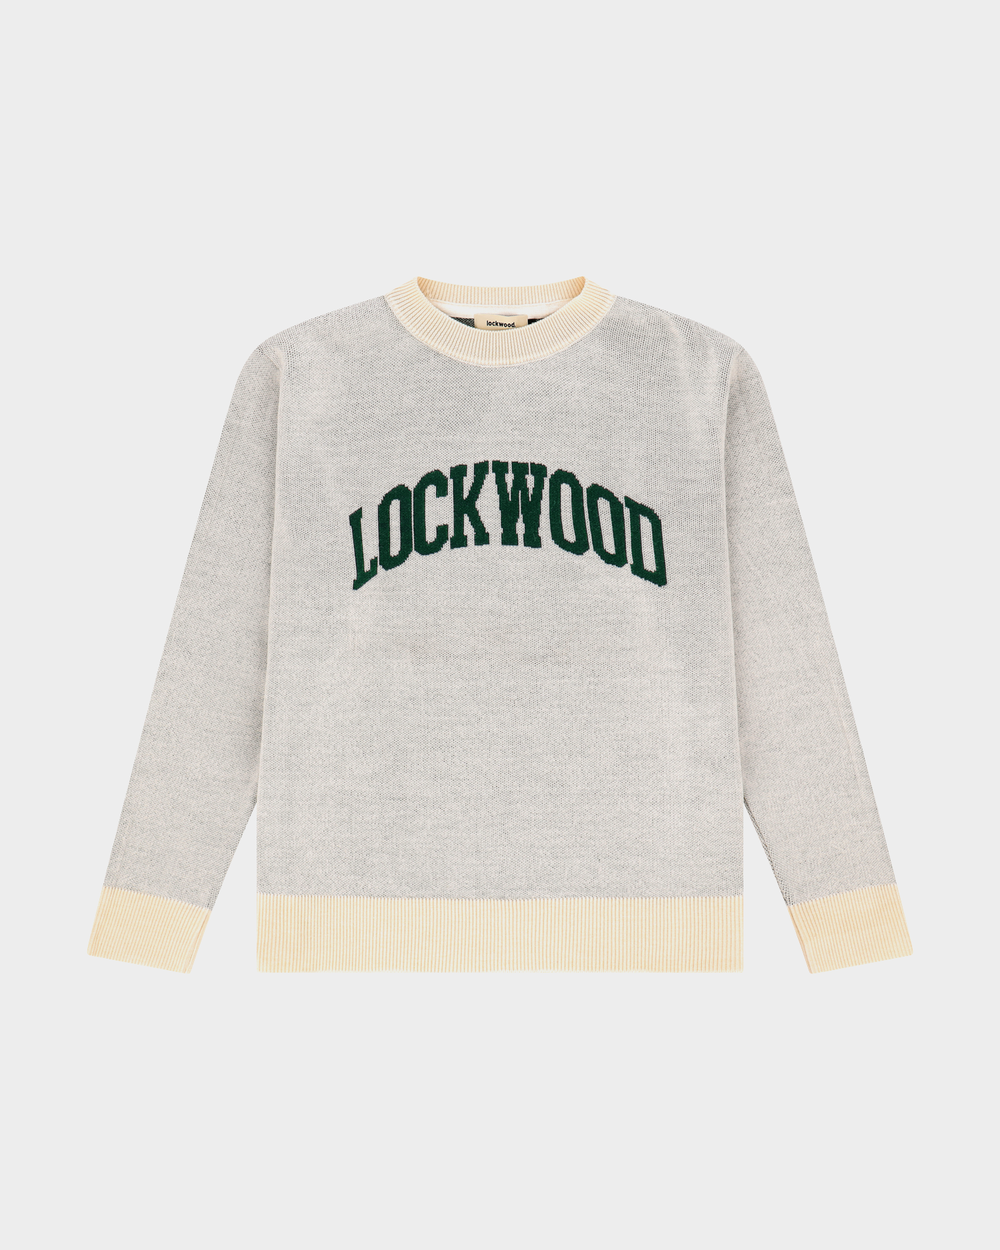 Lockwood Lockwood Jacquard Knit Crew Sweater Creme